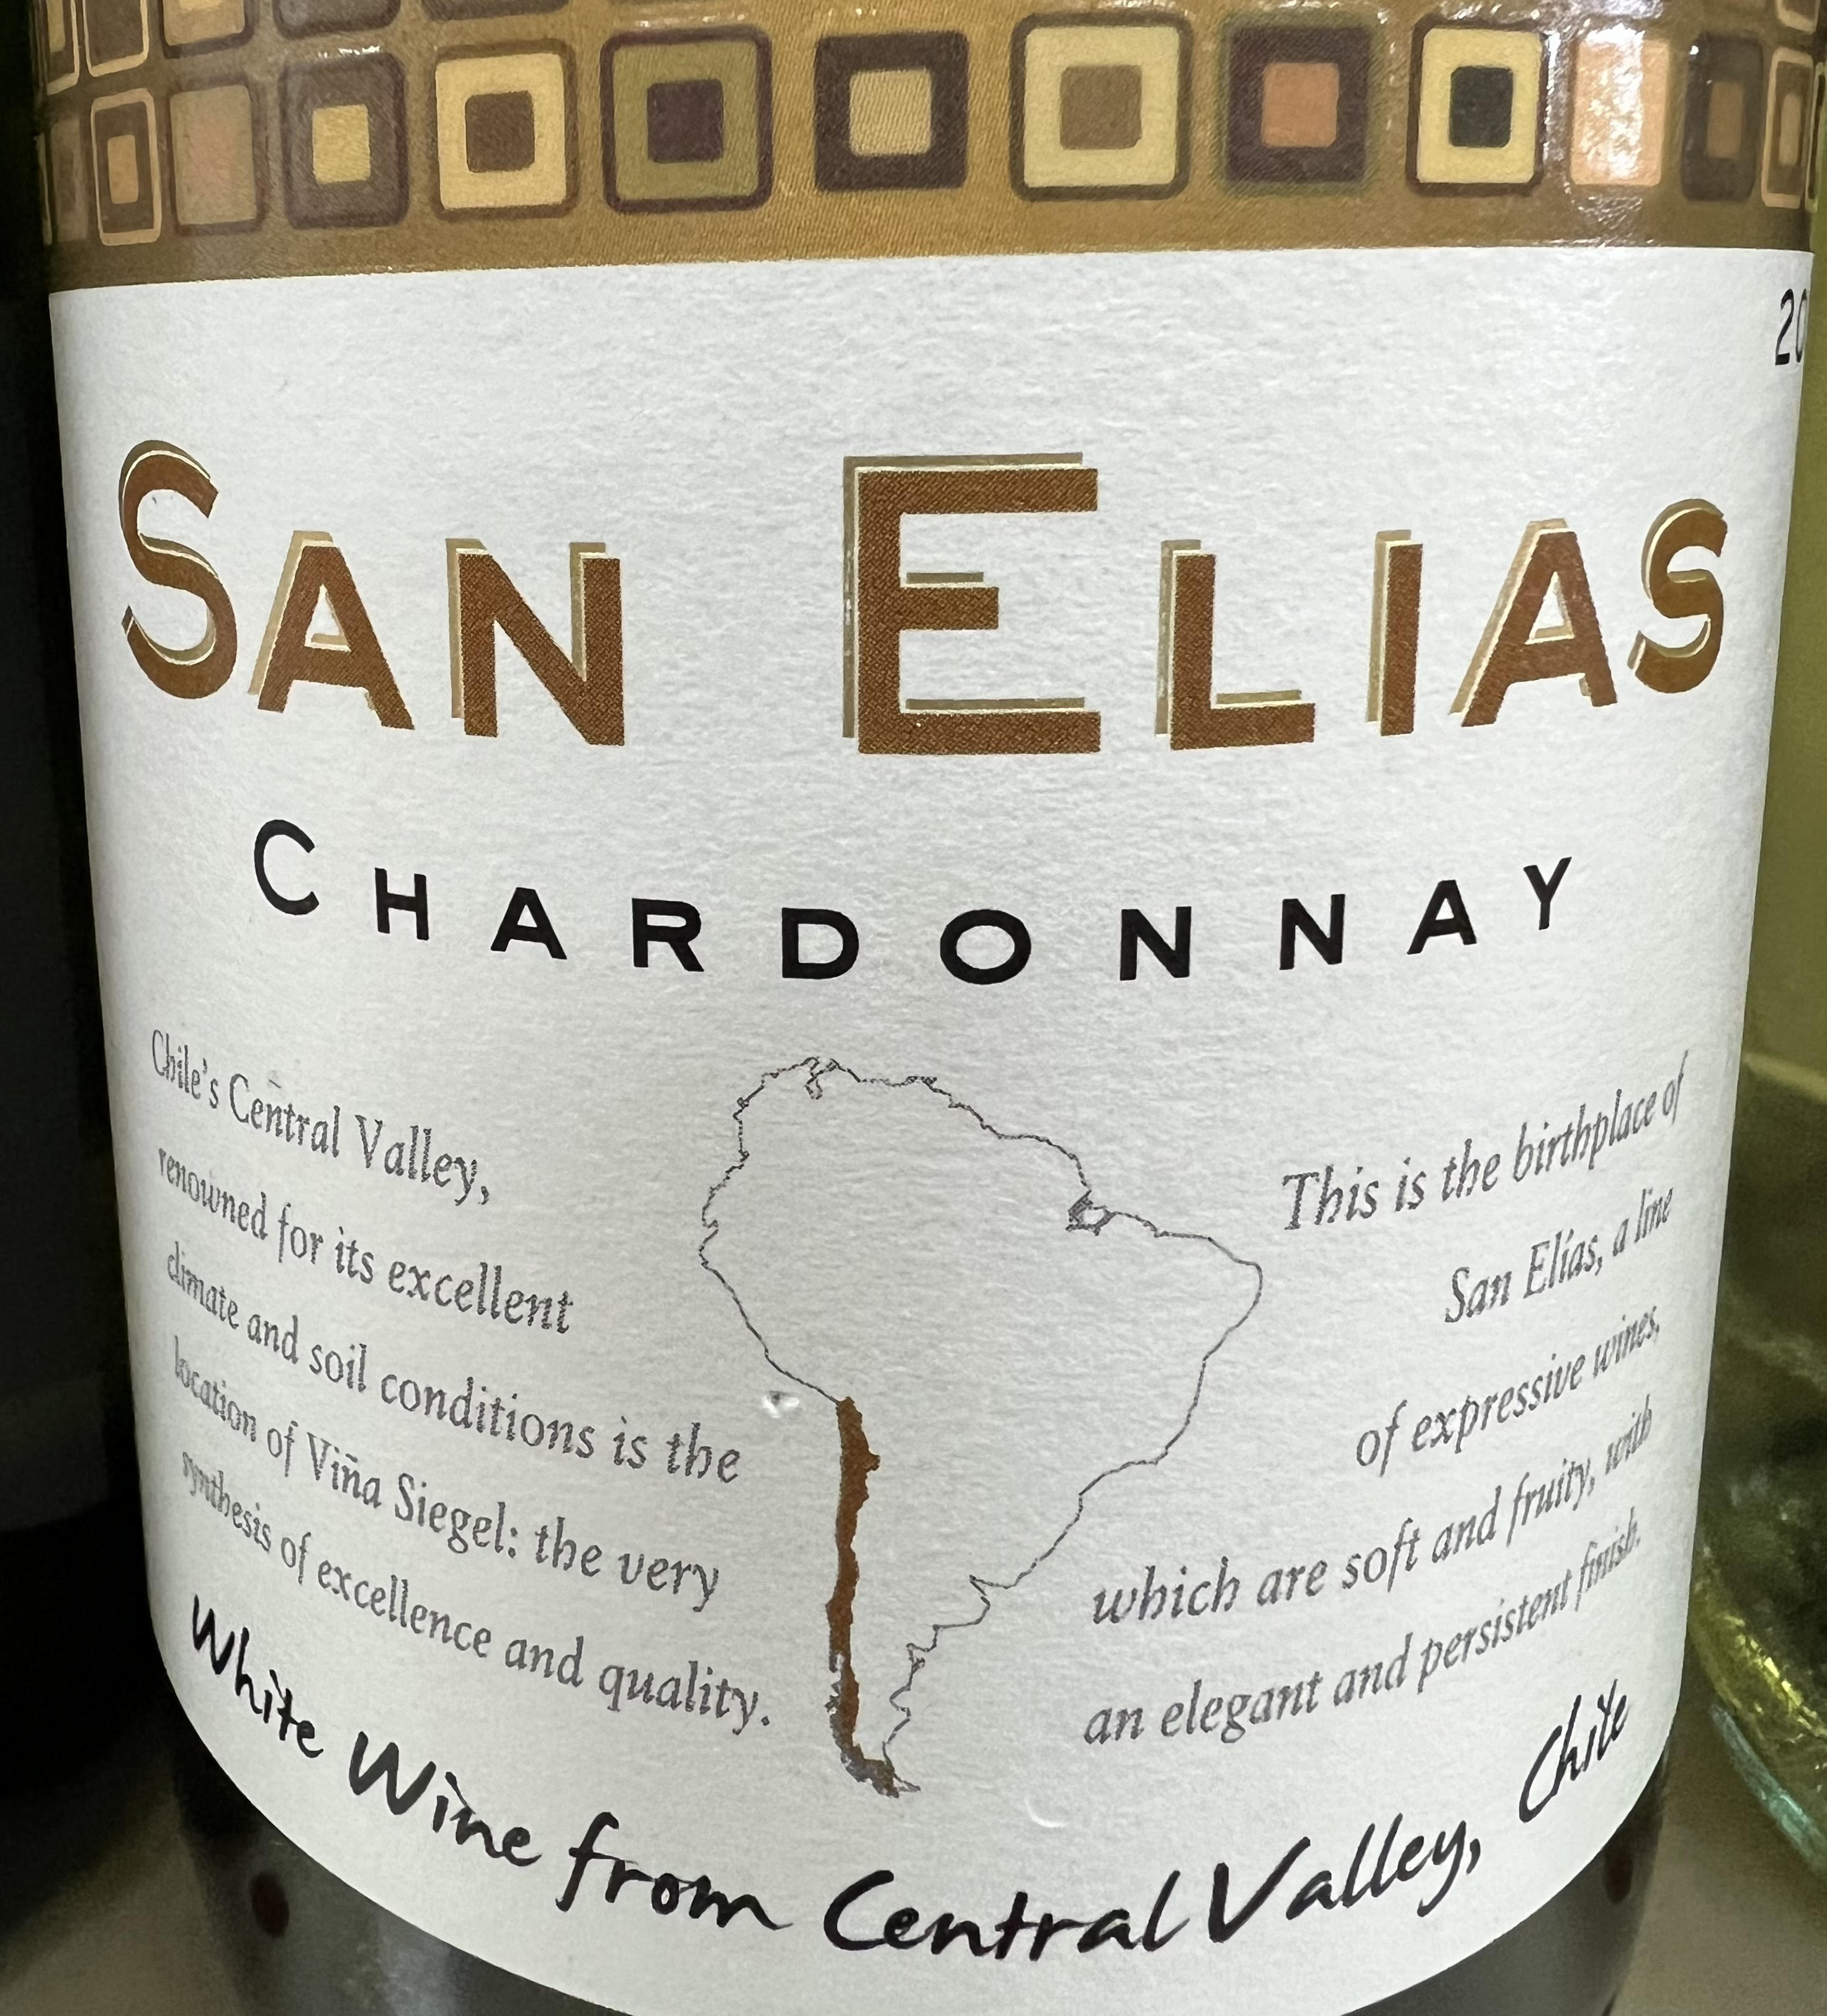 San Elias Chardonnay 2018